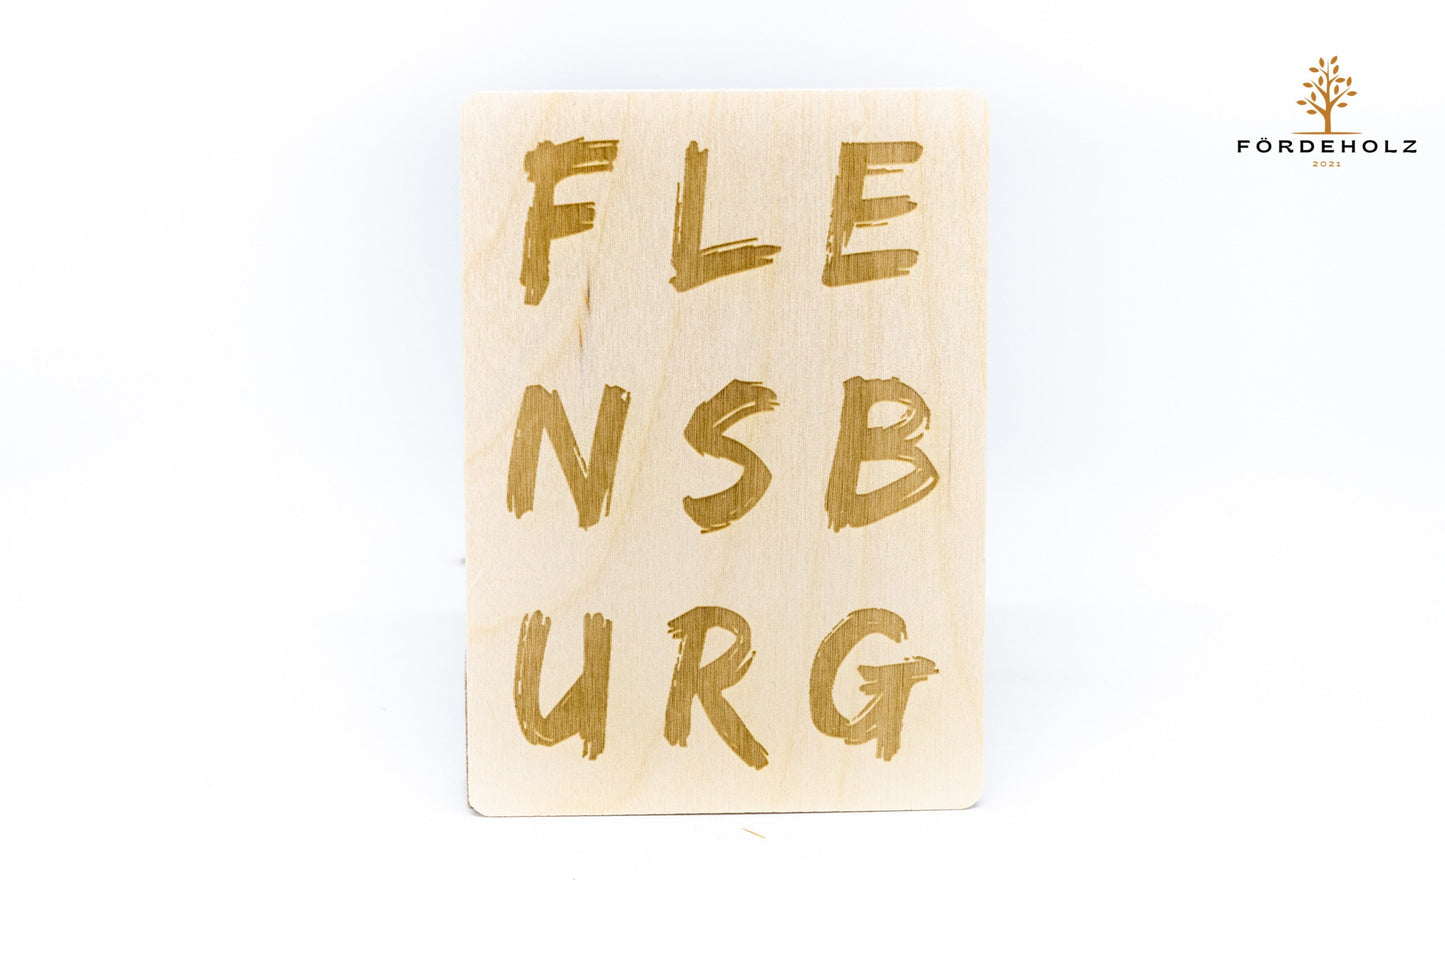 Holzpostkarte Flensburg - Postkarte aus Holz - Holzkarte - Ansichtskarte